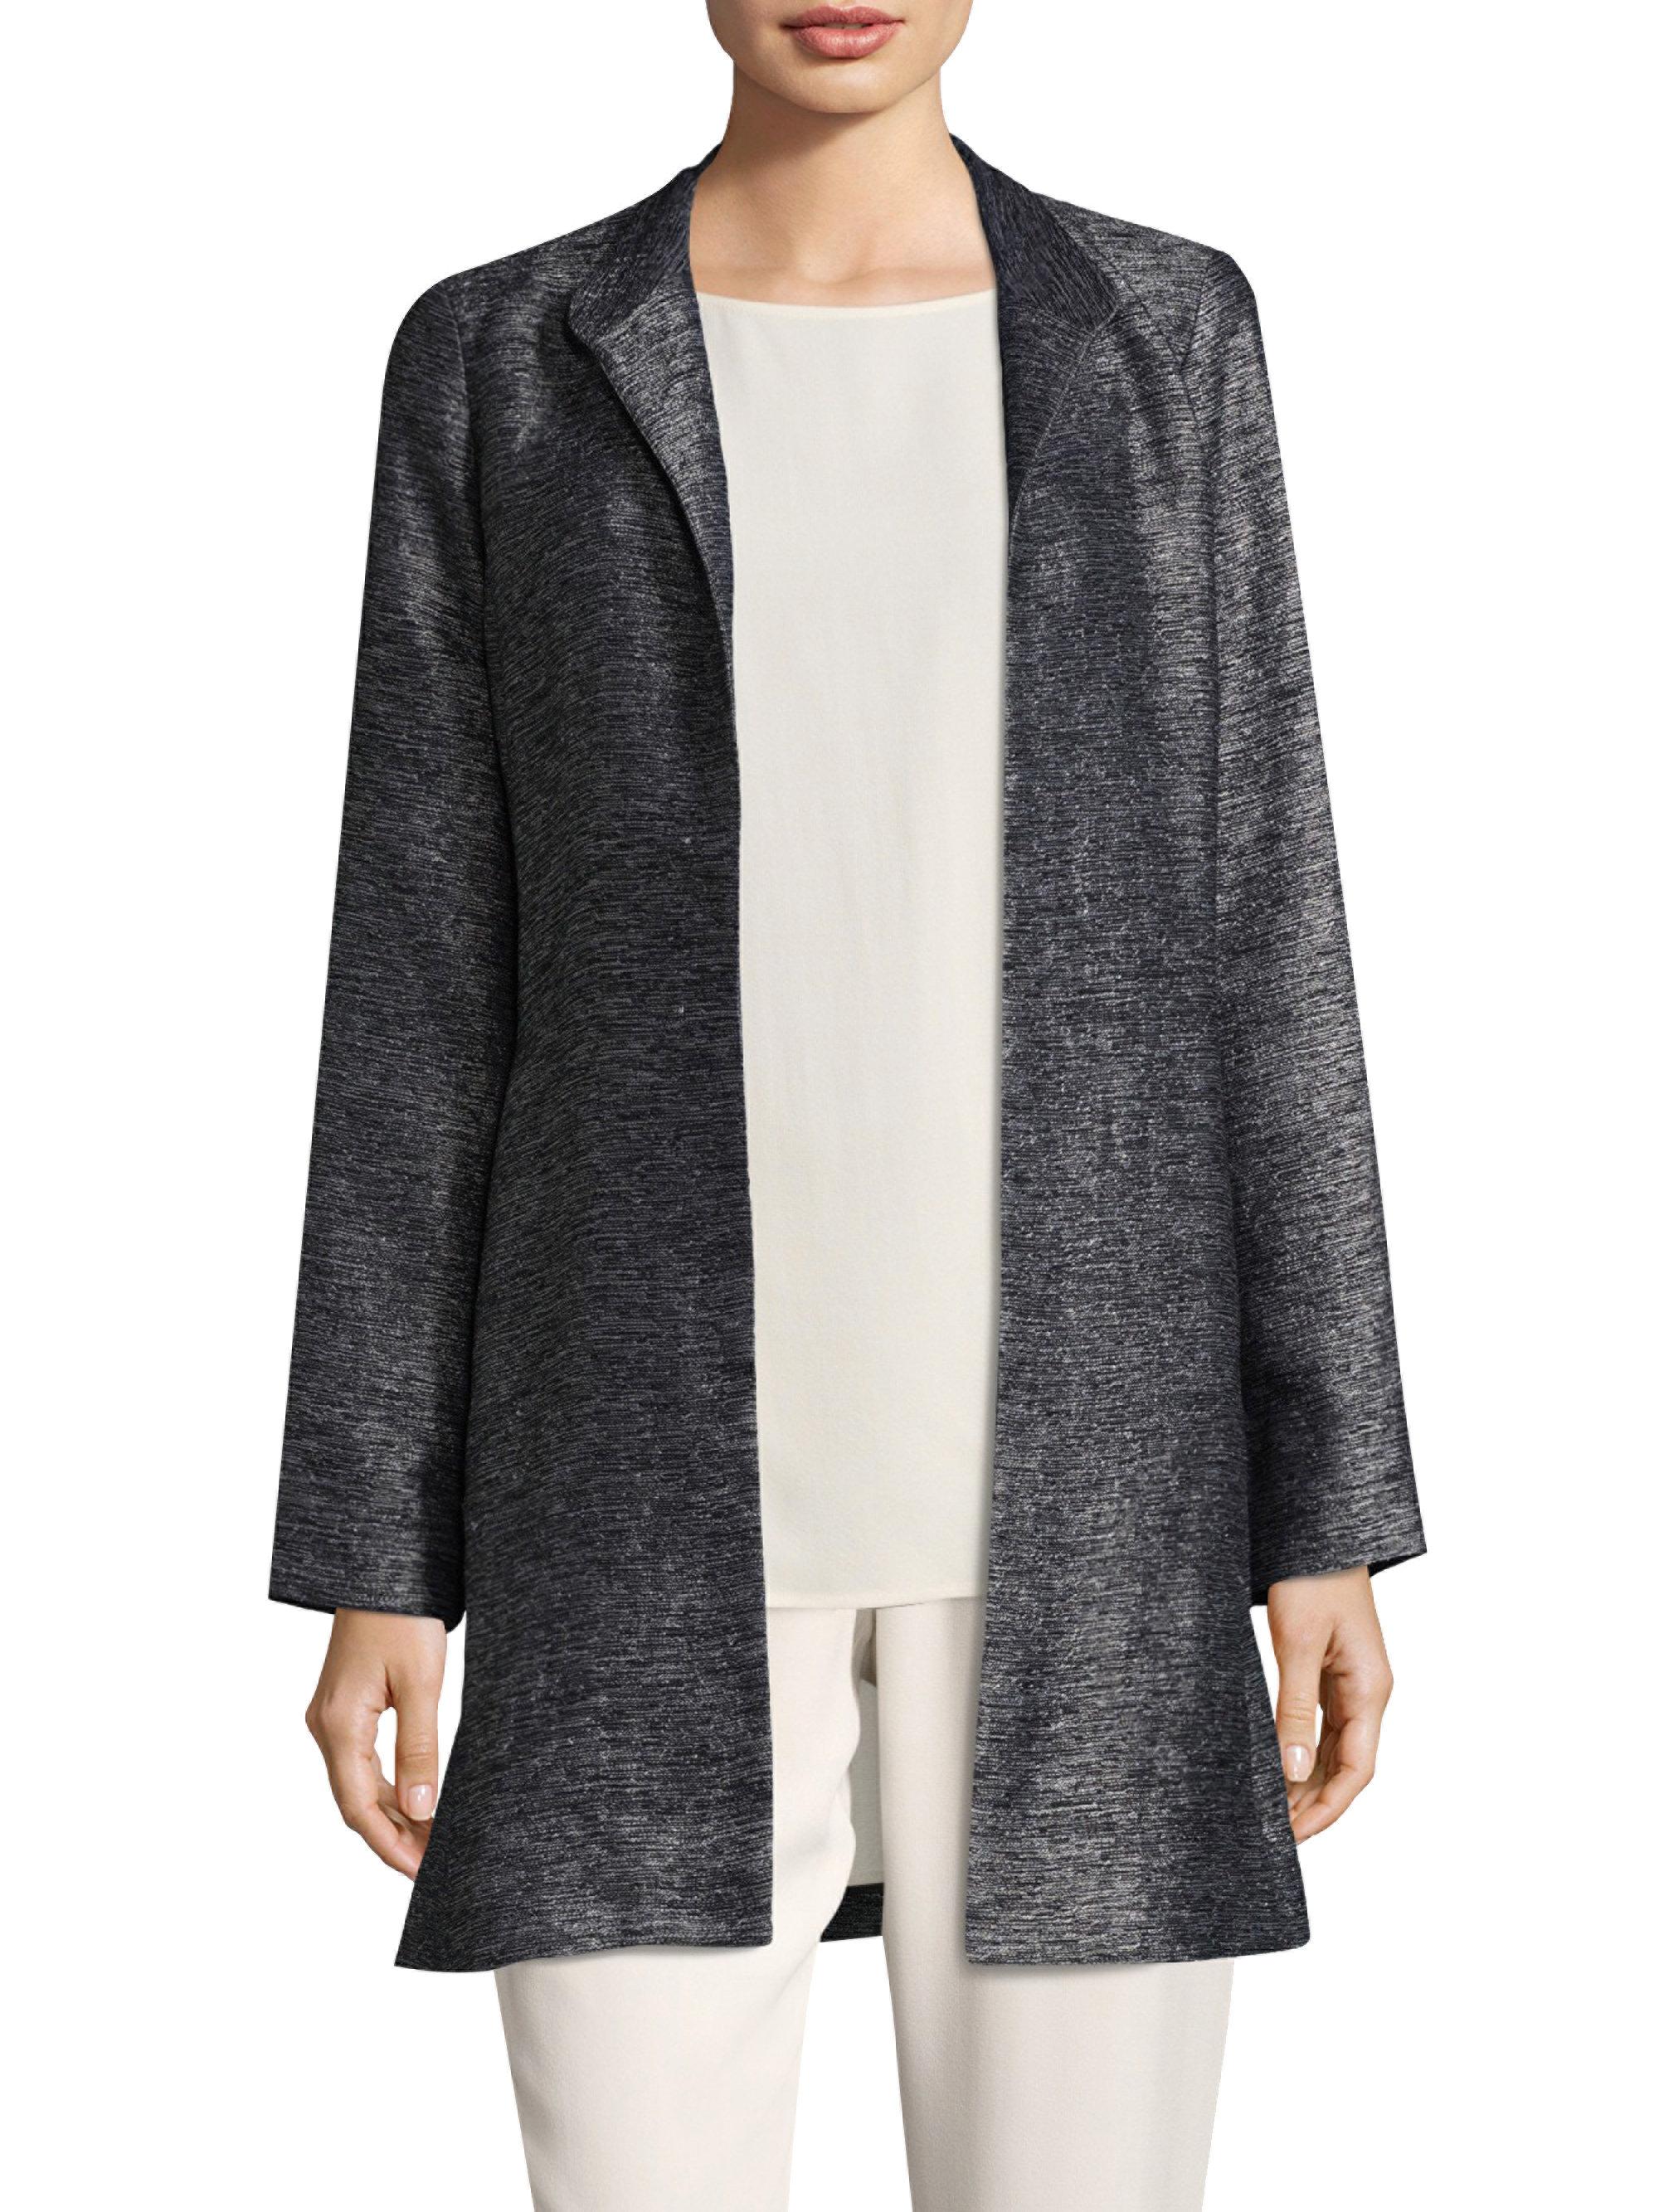 Eileen Fisher Silk Long Open-front Jacket in Charcoal (Gray) - Lyst